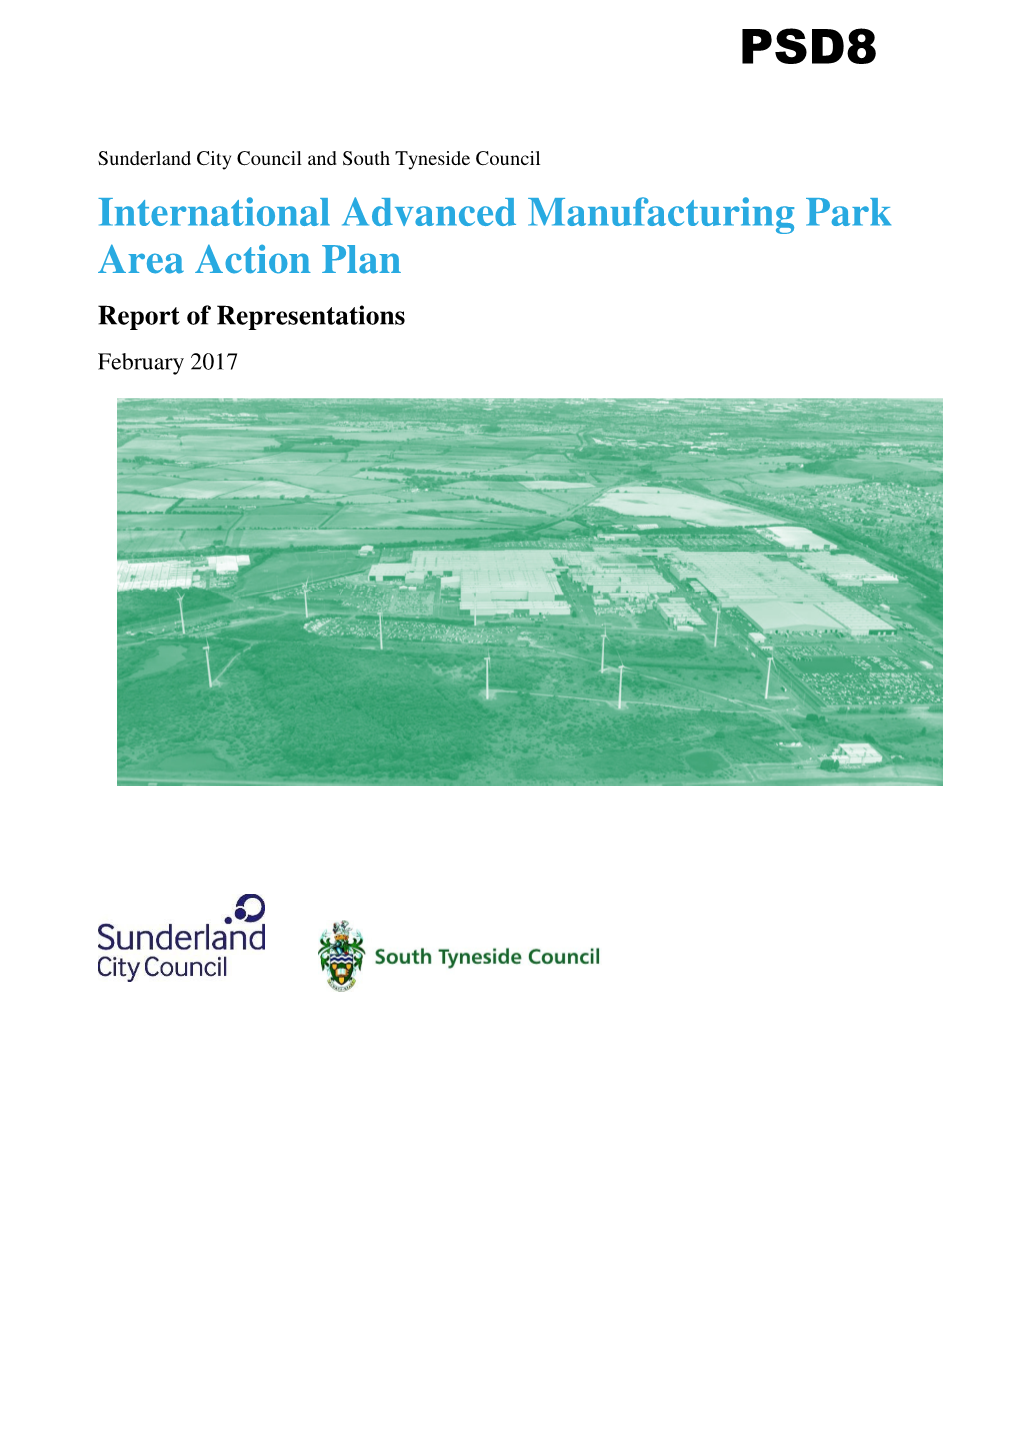 International Advanced Manufacturing Park Area Action Plan